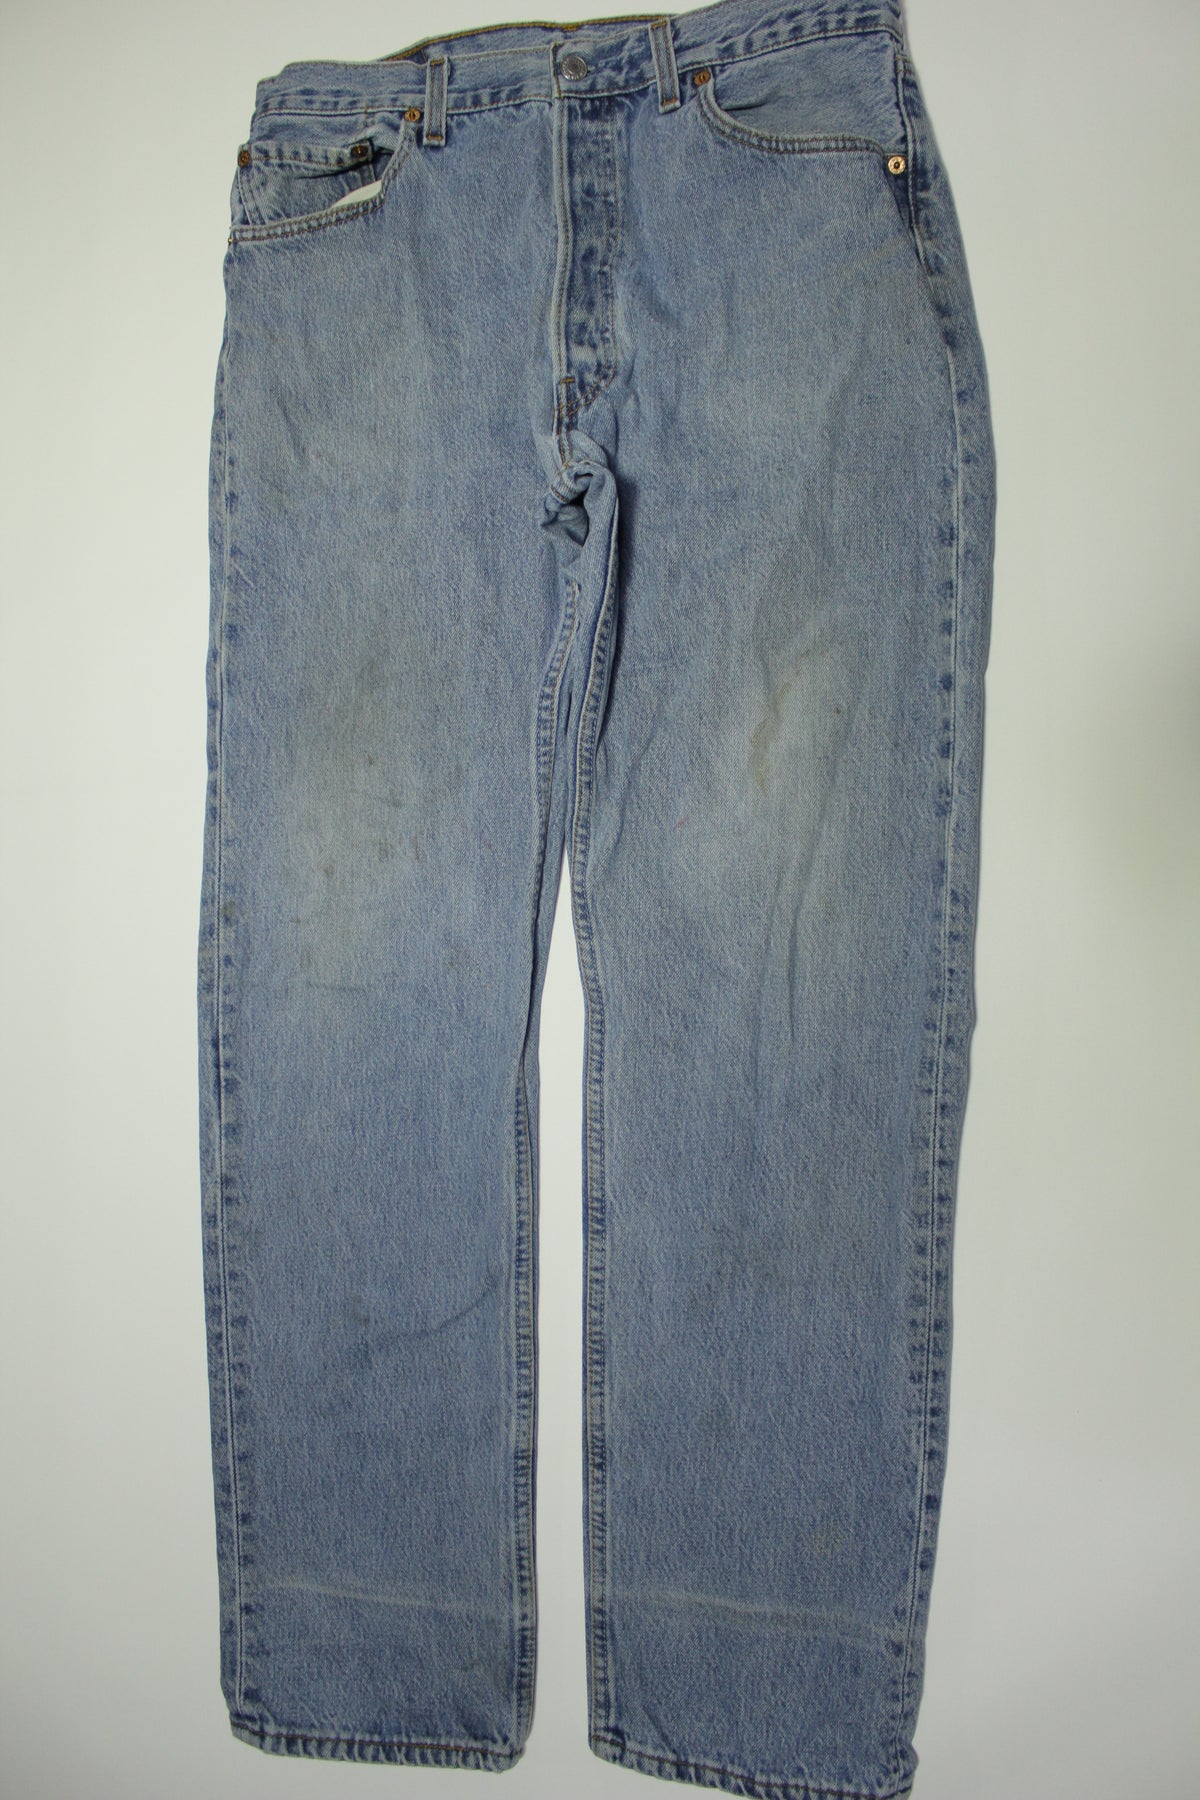 Levis 501 Button Fly Vintage 90's Denim Grunge Punk Blue Jeans